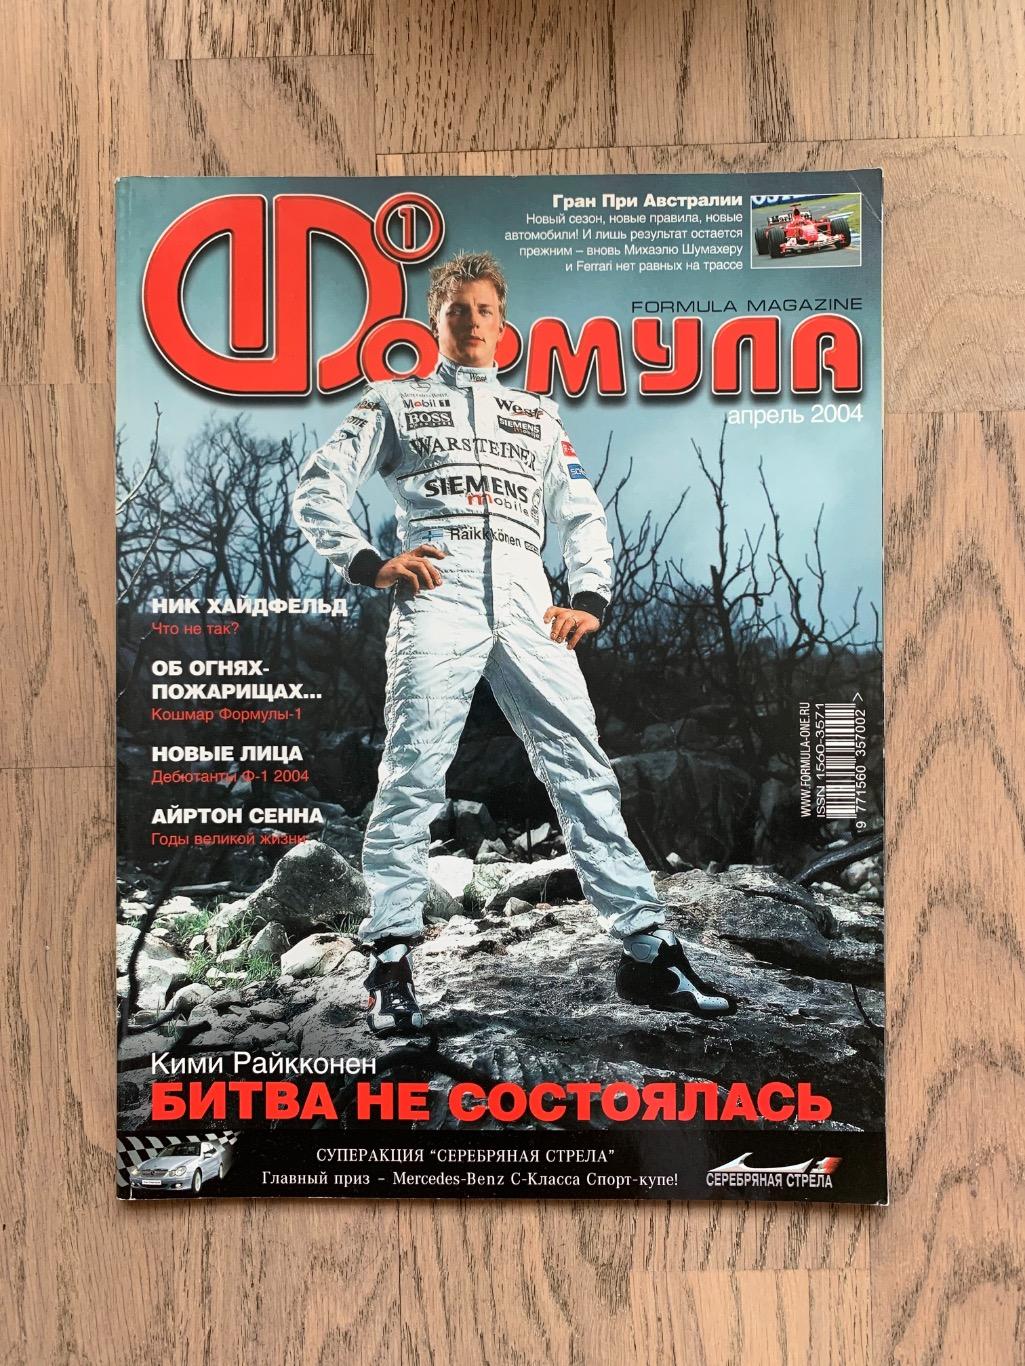 Журнал Формула 1 (Formula Magazine) / апрель 2004